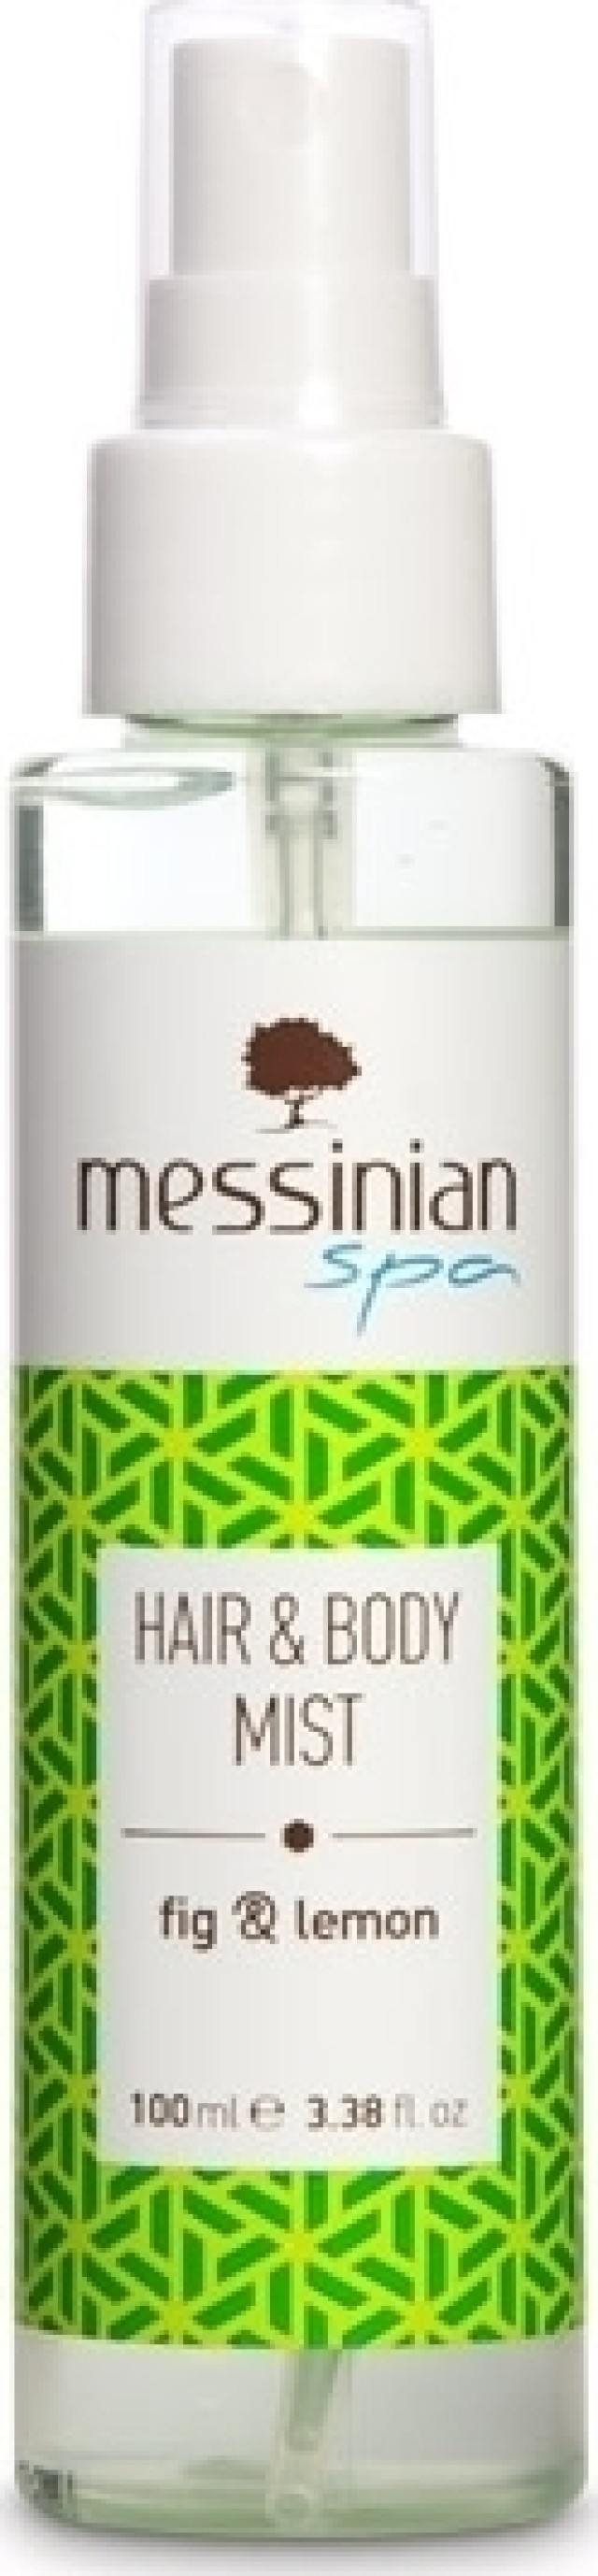 Messinian Spa Hair & Body Mist Αρωματικό Σπρέι για Μαλλιά & Σώμα με Σύκο & Λεμόνι 100ml